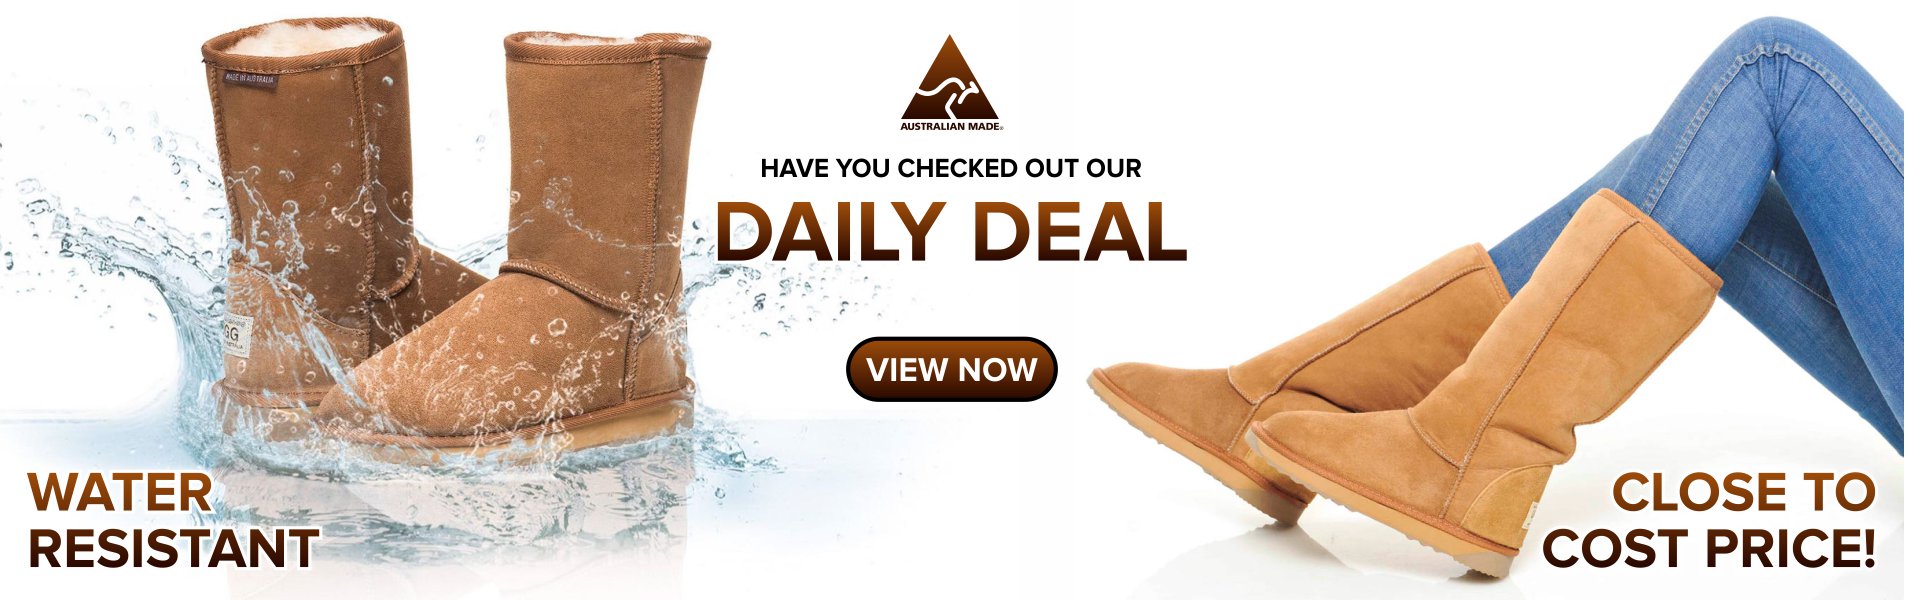 Australian-Leather-Ugg-Boots-Sheepskin Woolen Uggboots-Daily-Deal